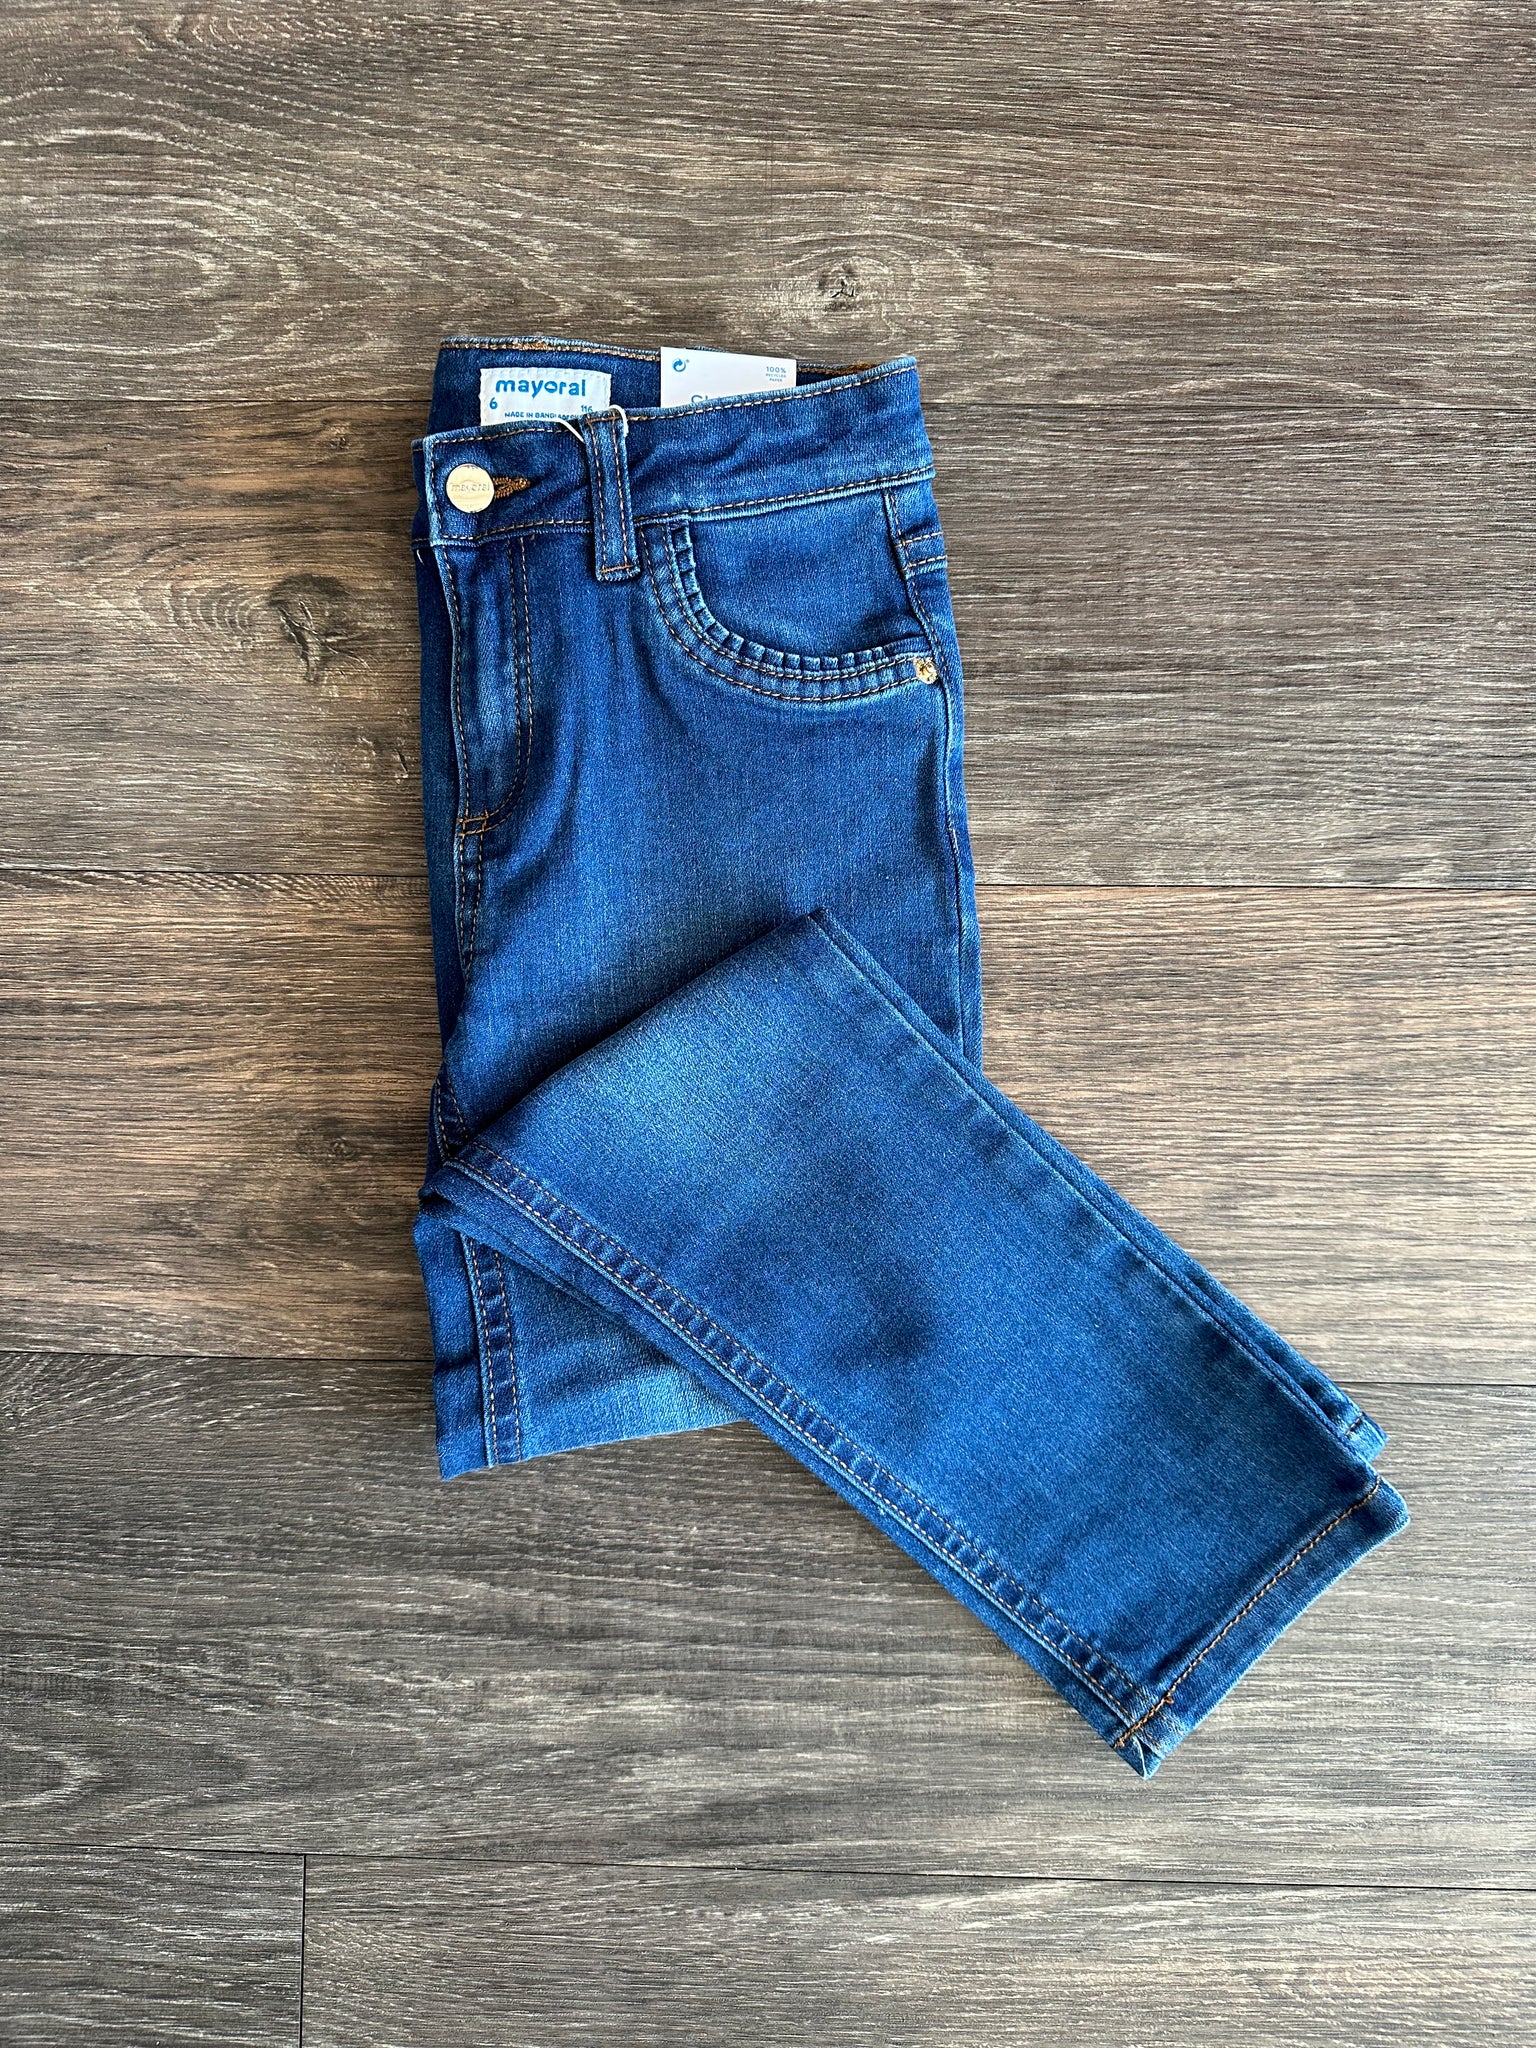 527 - Girls Skinny Jean - Medium Wash